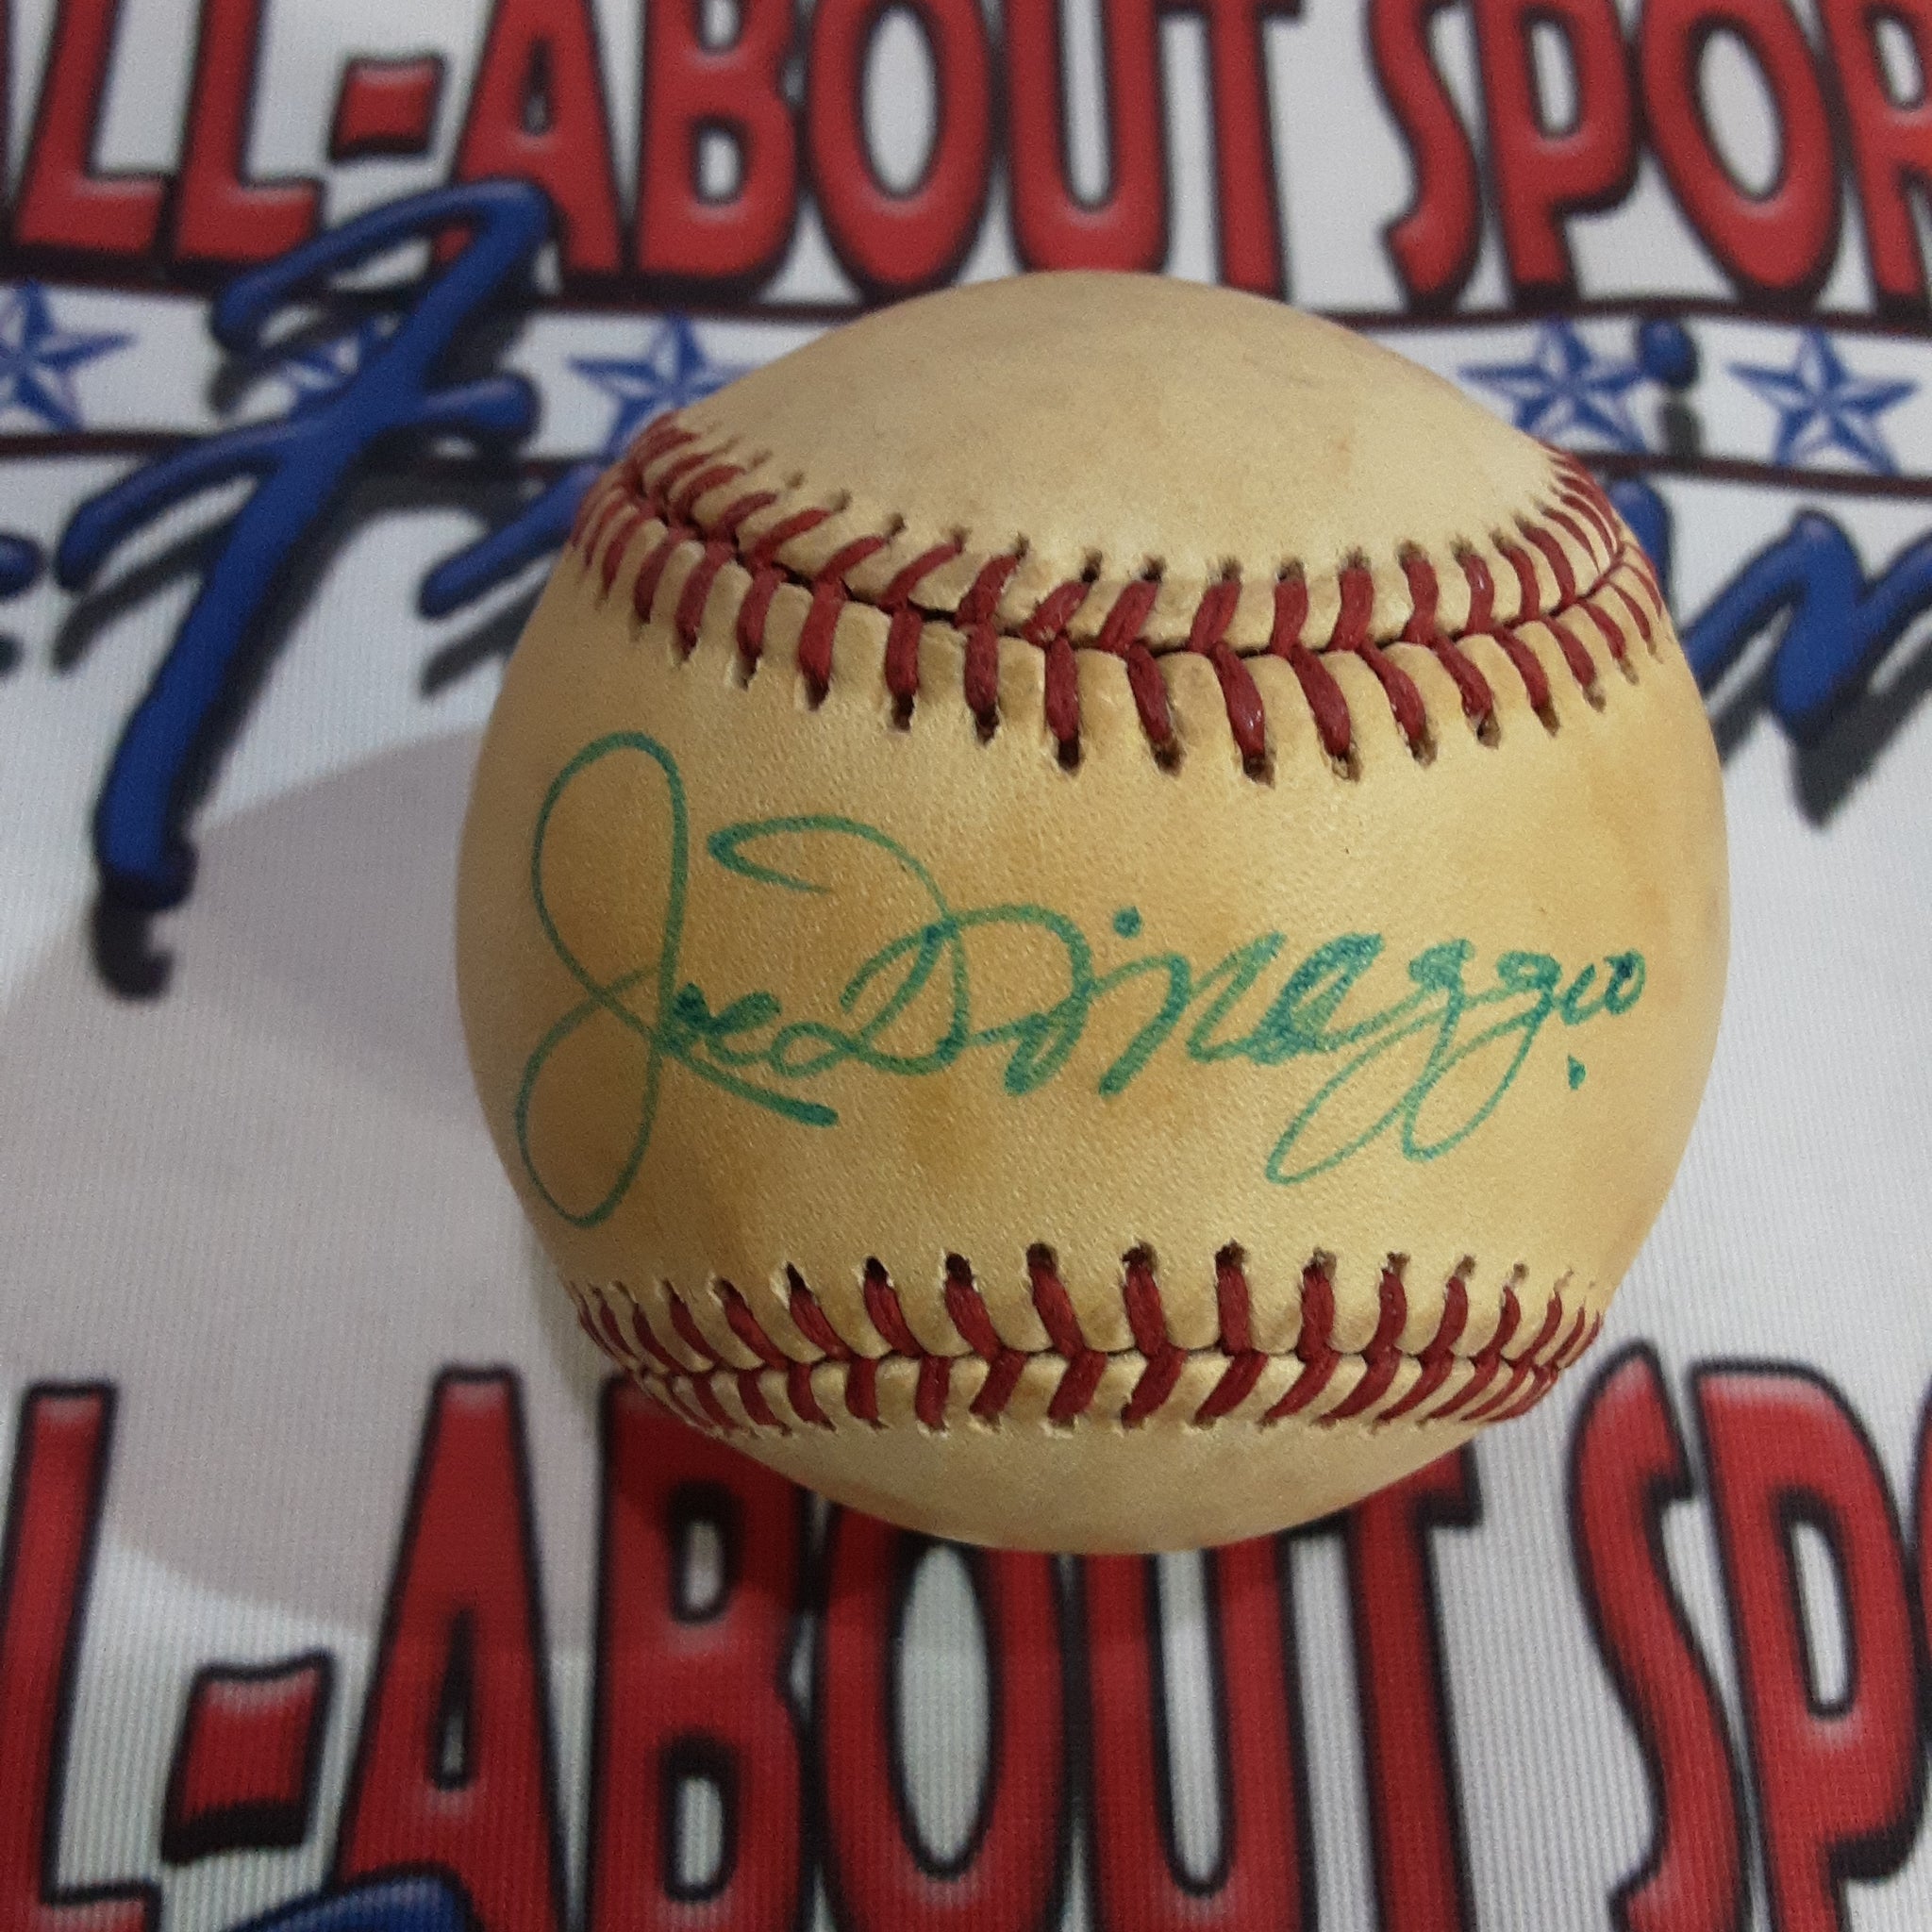 Albert Pujols Signed 700 Baseball – “703 HR”